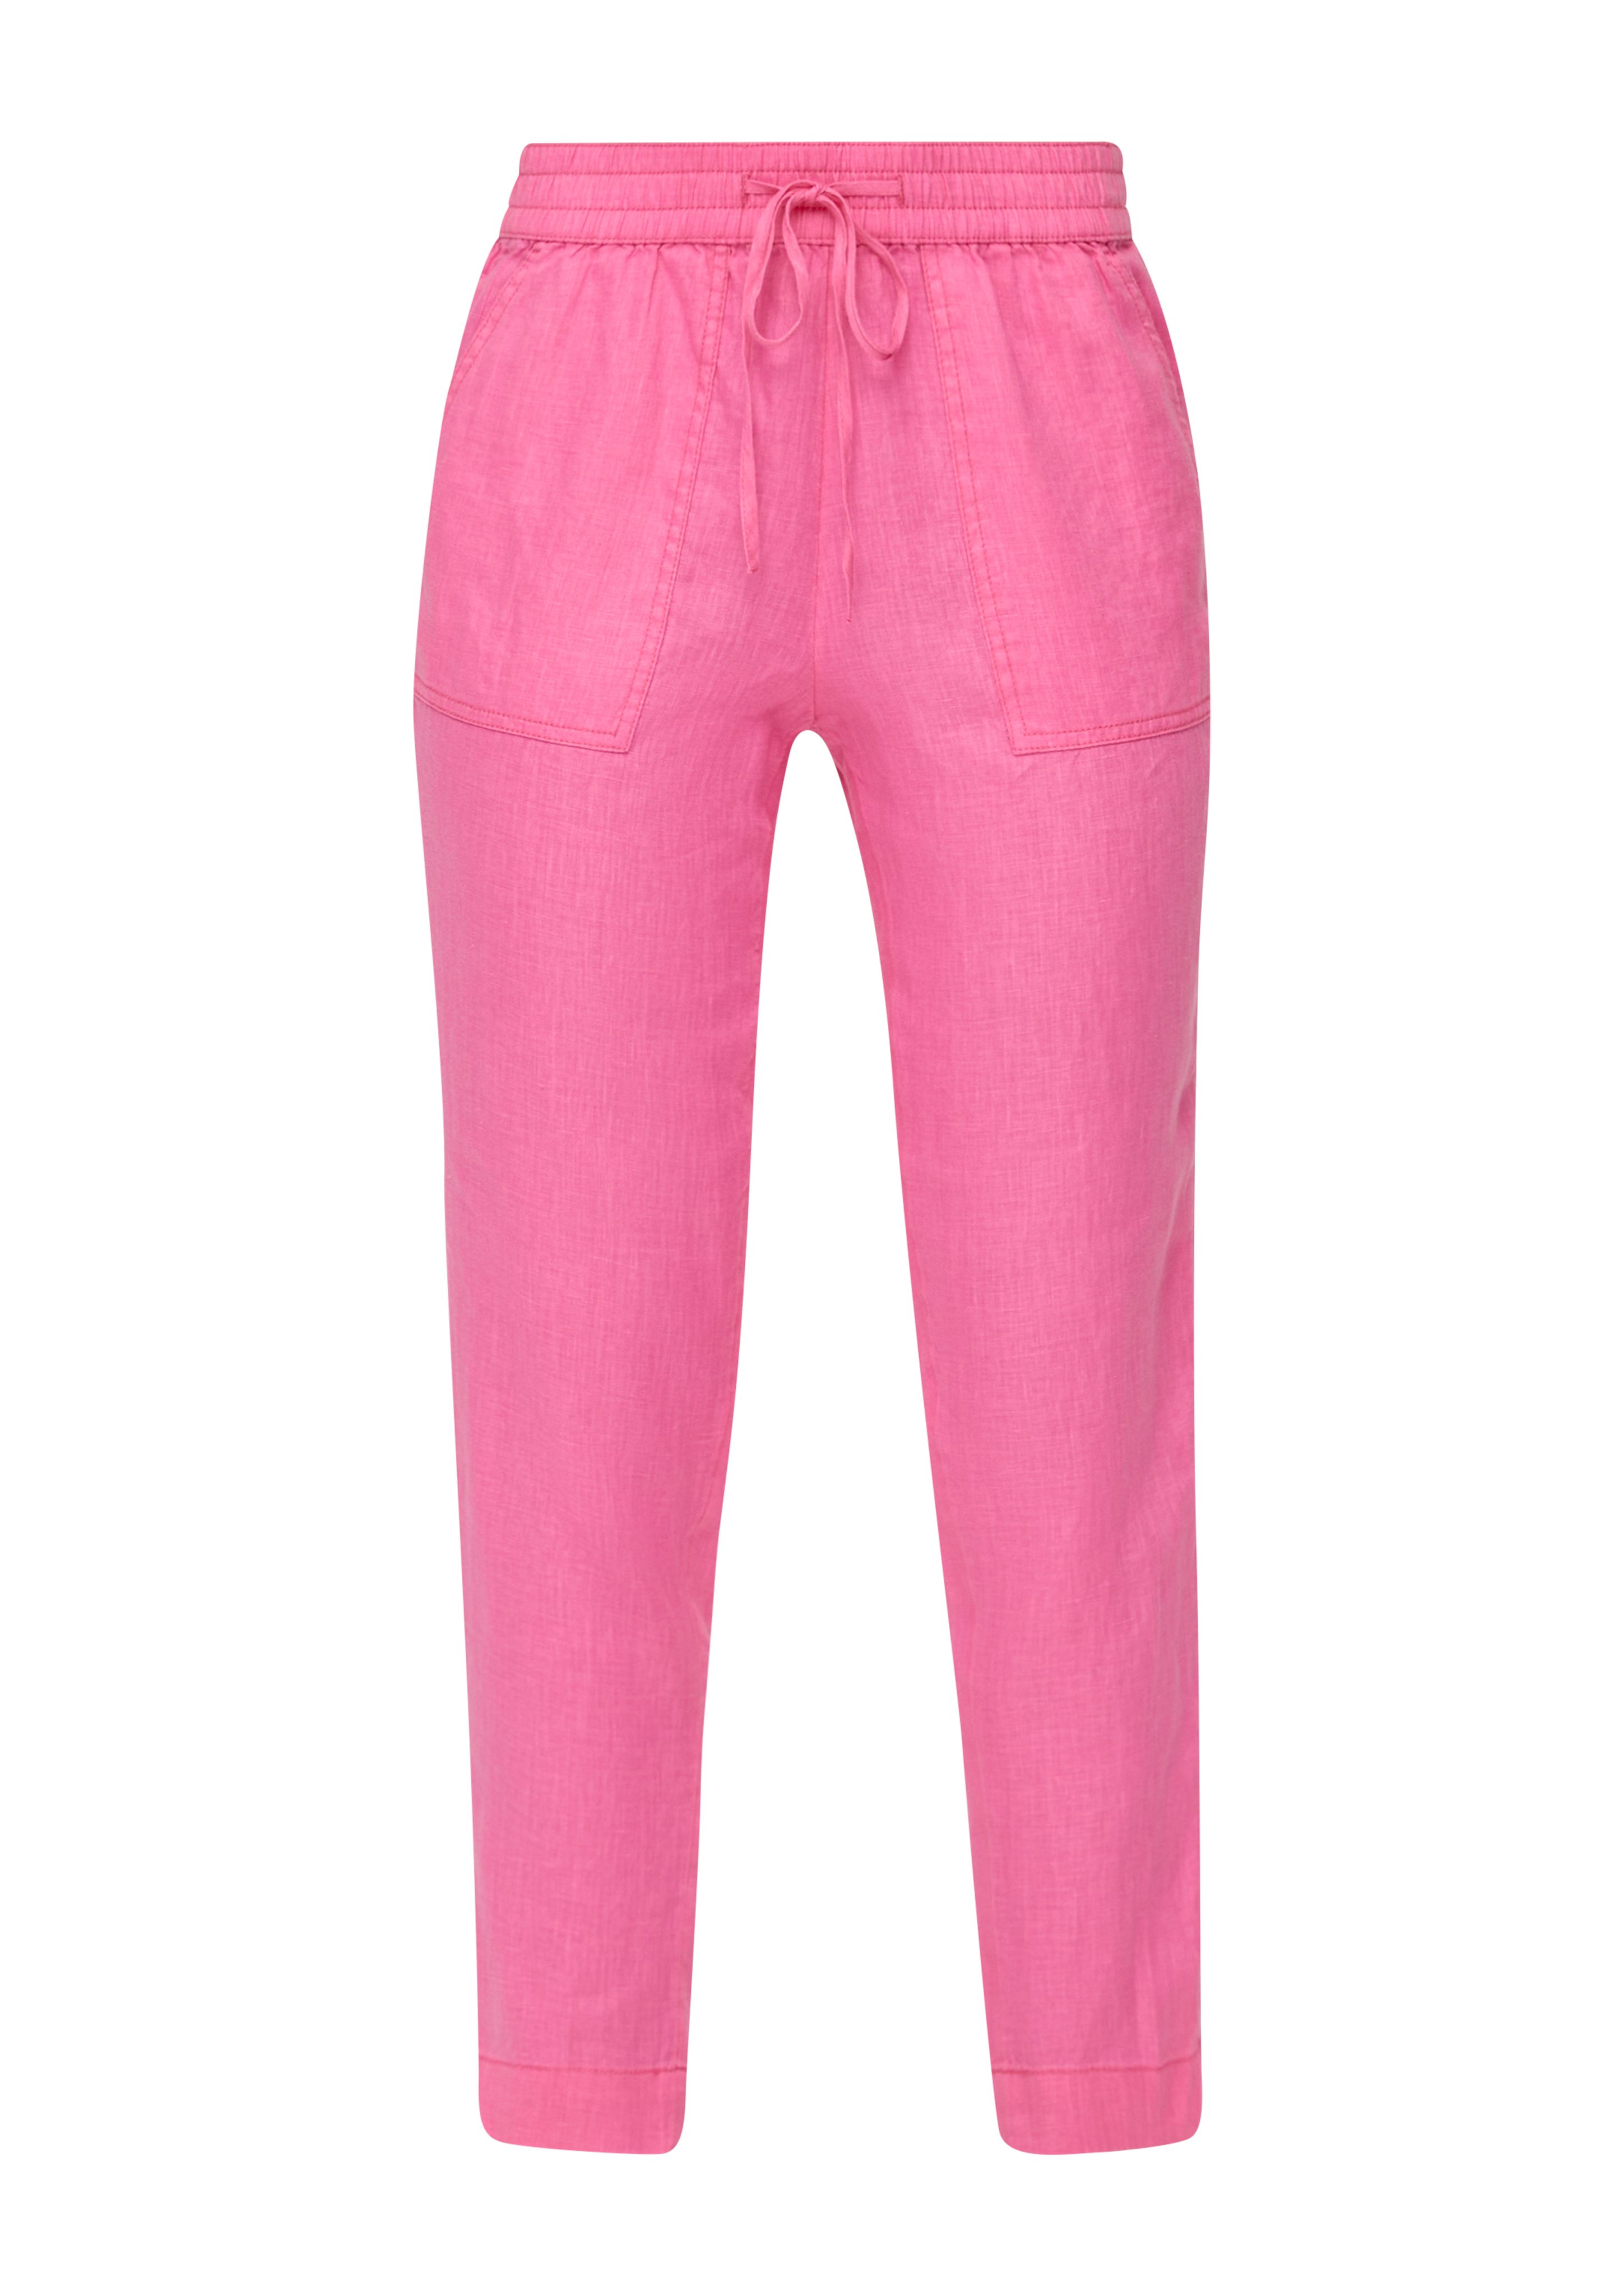 aus s.Oliver pink Relaxed: 7/8-Hose Jogpants Leinen